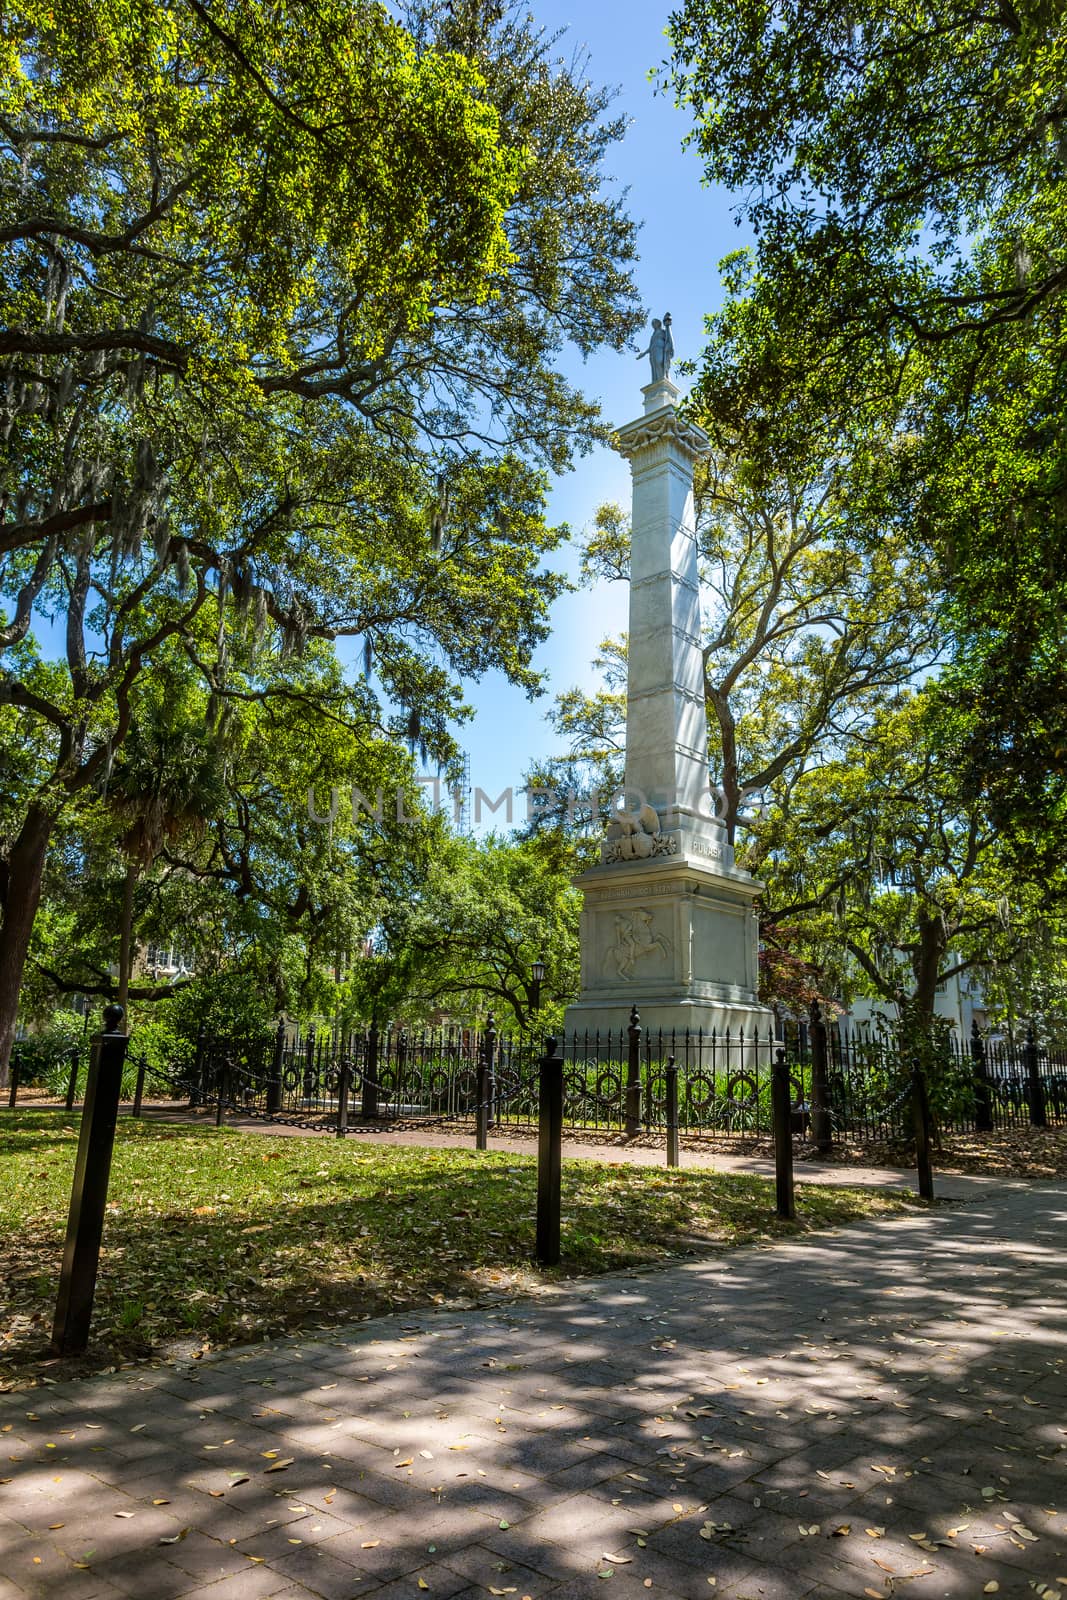 Casimir Pulaski Monument Savannah by adifferentbrian